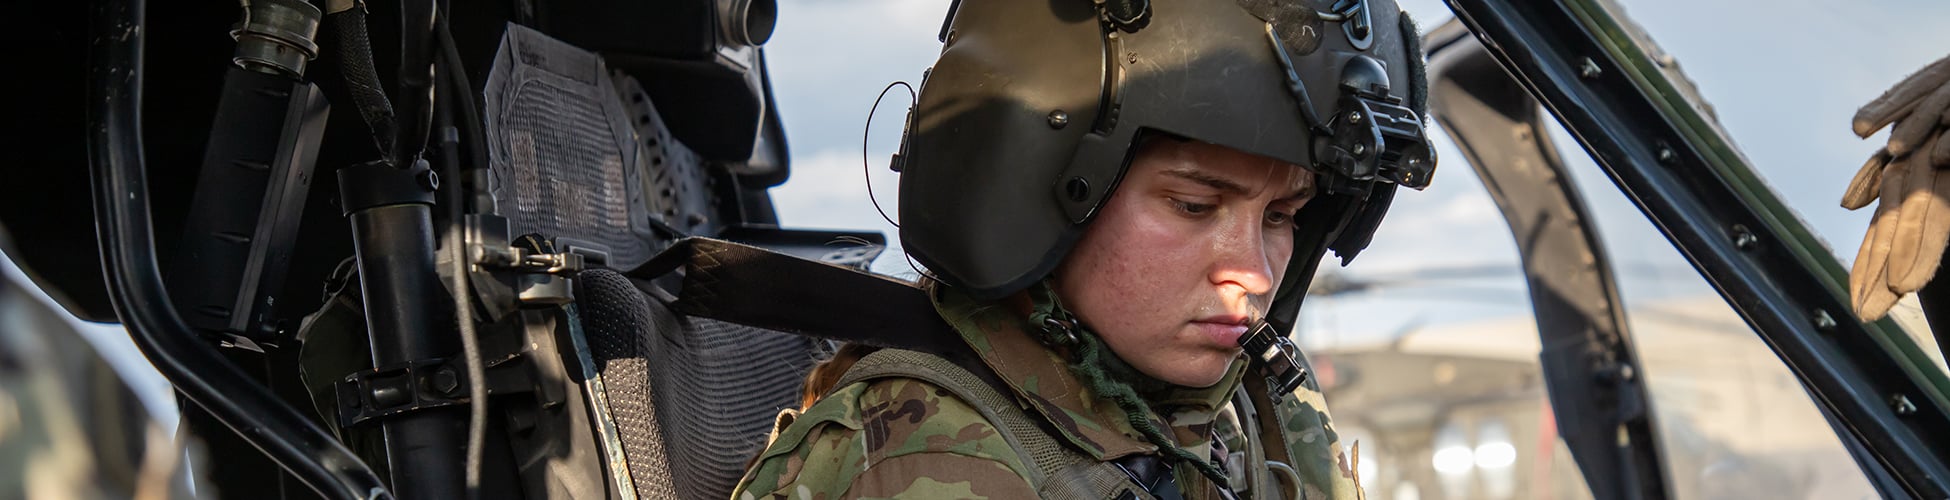 U.S. Army Pilot conducts pre-flight checks